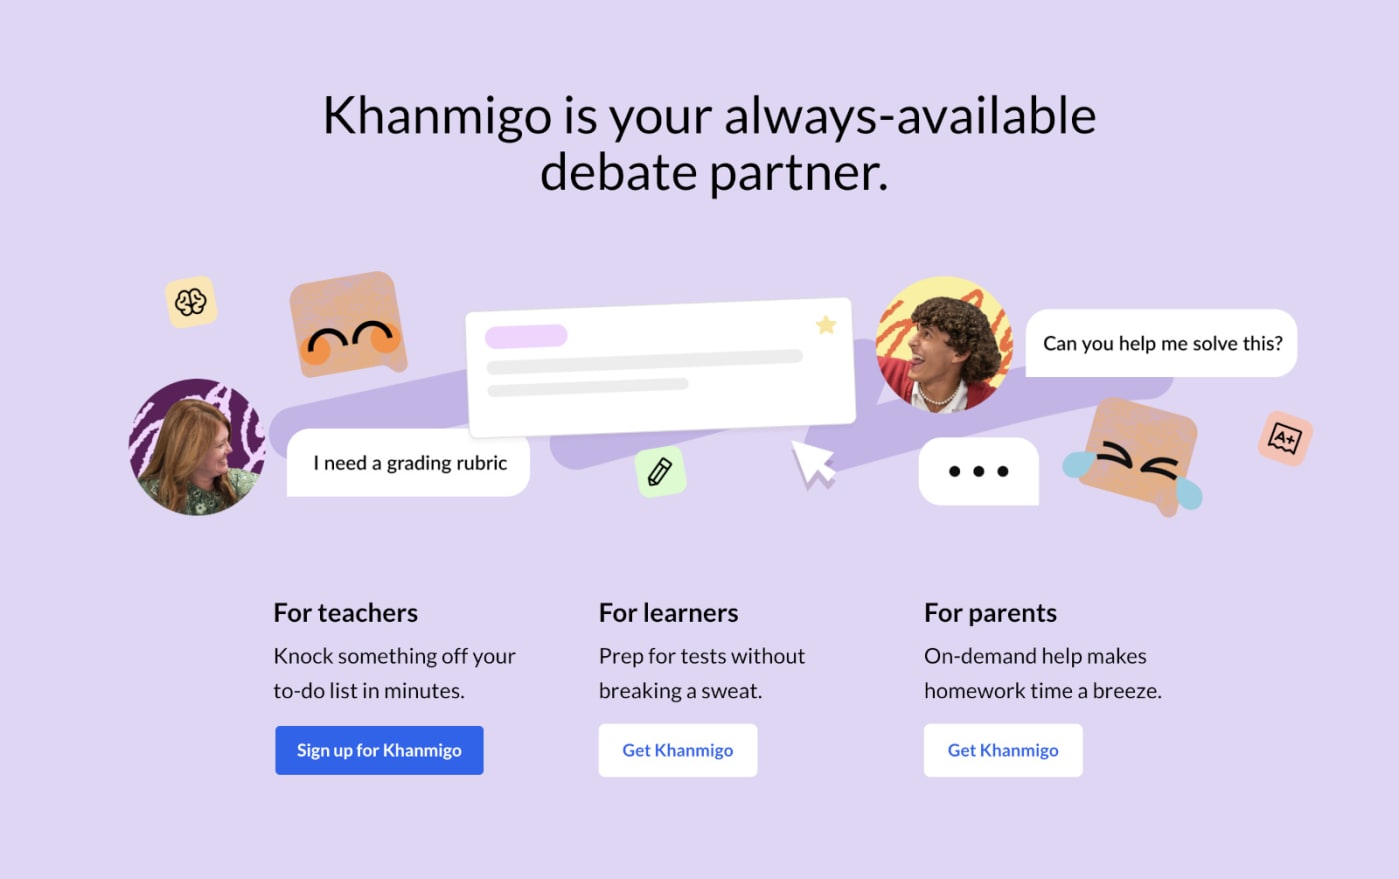 Microsoft teams up with Khan Academy to make the Khanmigo AI teaching assistant free